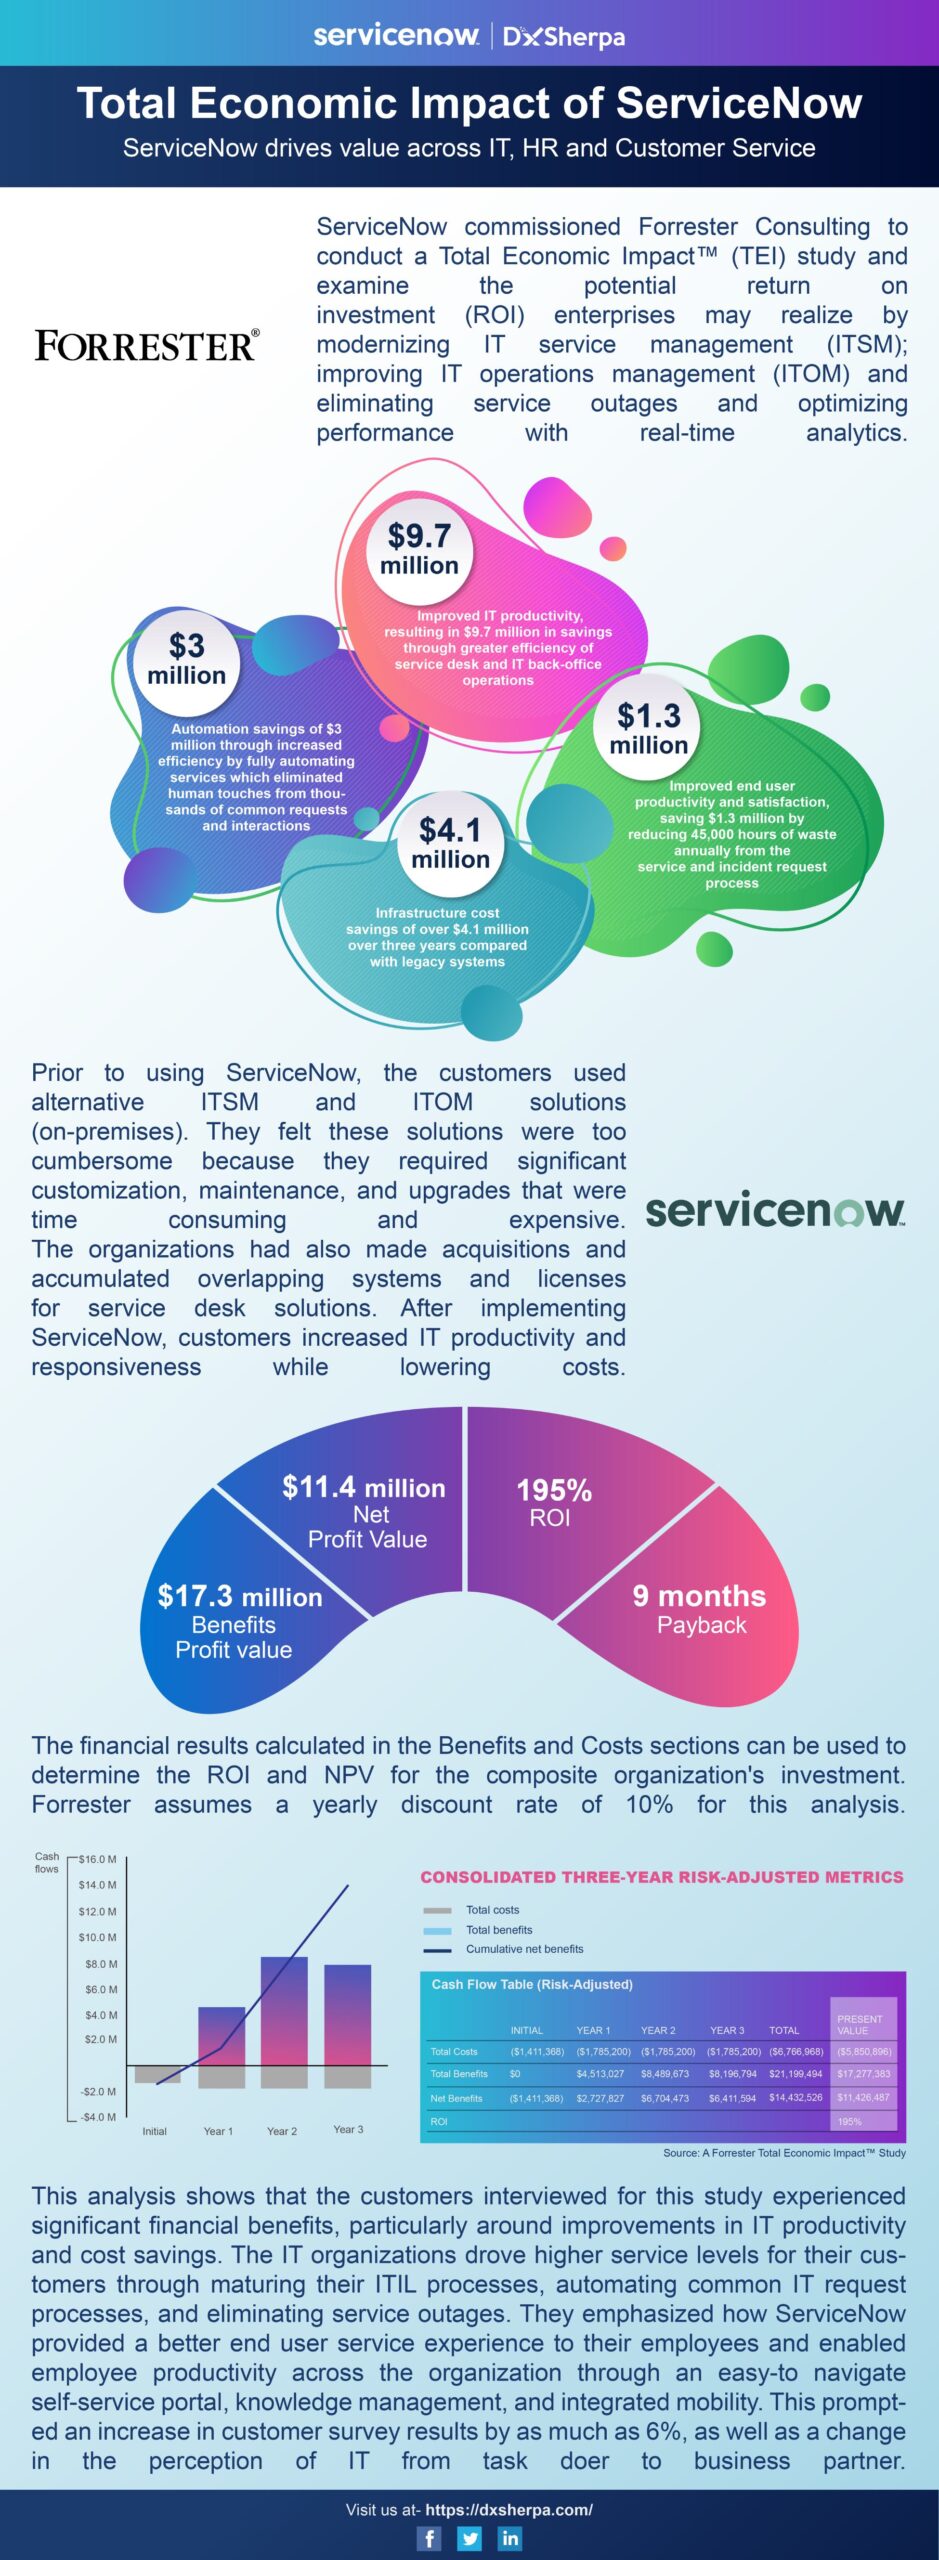 Total Economic Impact of ServiceNow